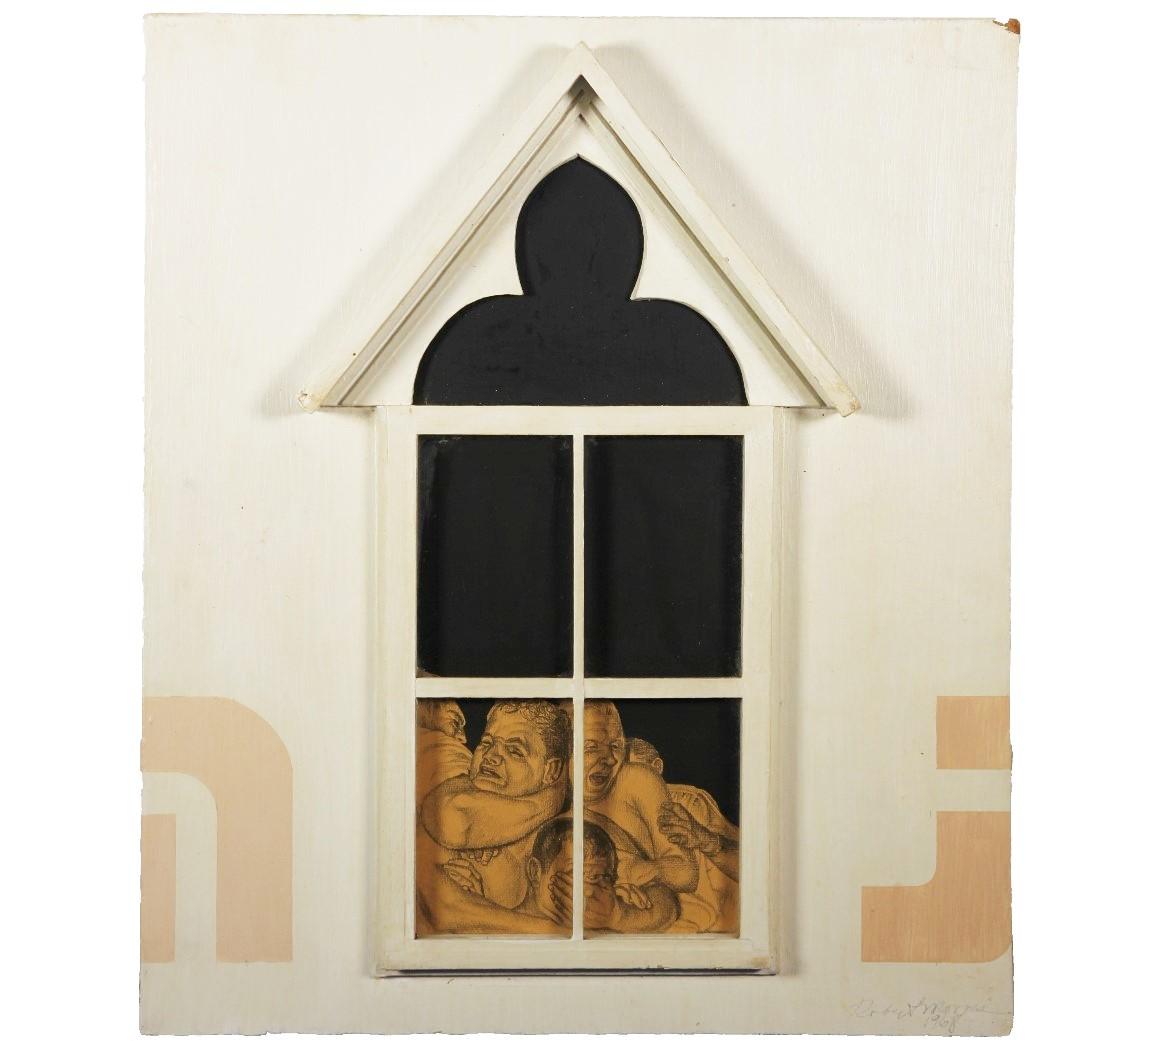 Assemblage with Men Wrestling Inside a Window - Sculpture by Robert Morris